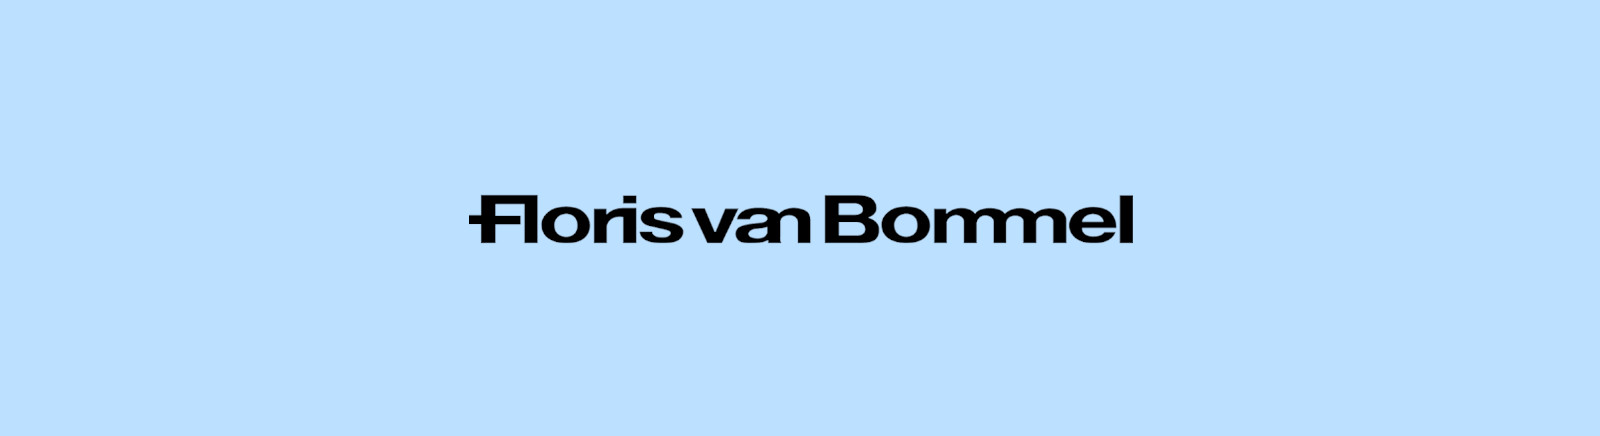 Floris van Bommel Schnürboots online entdecken im Juppen Shop